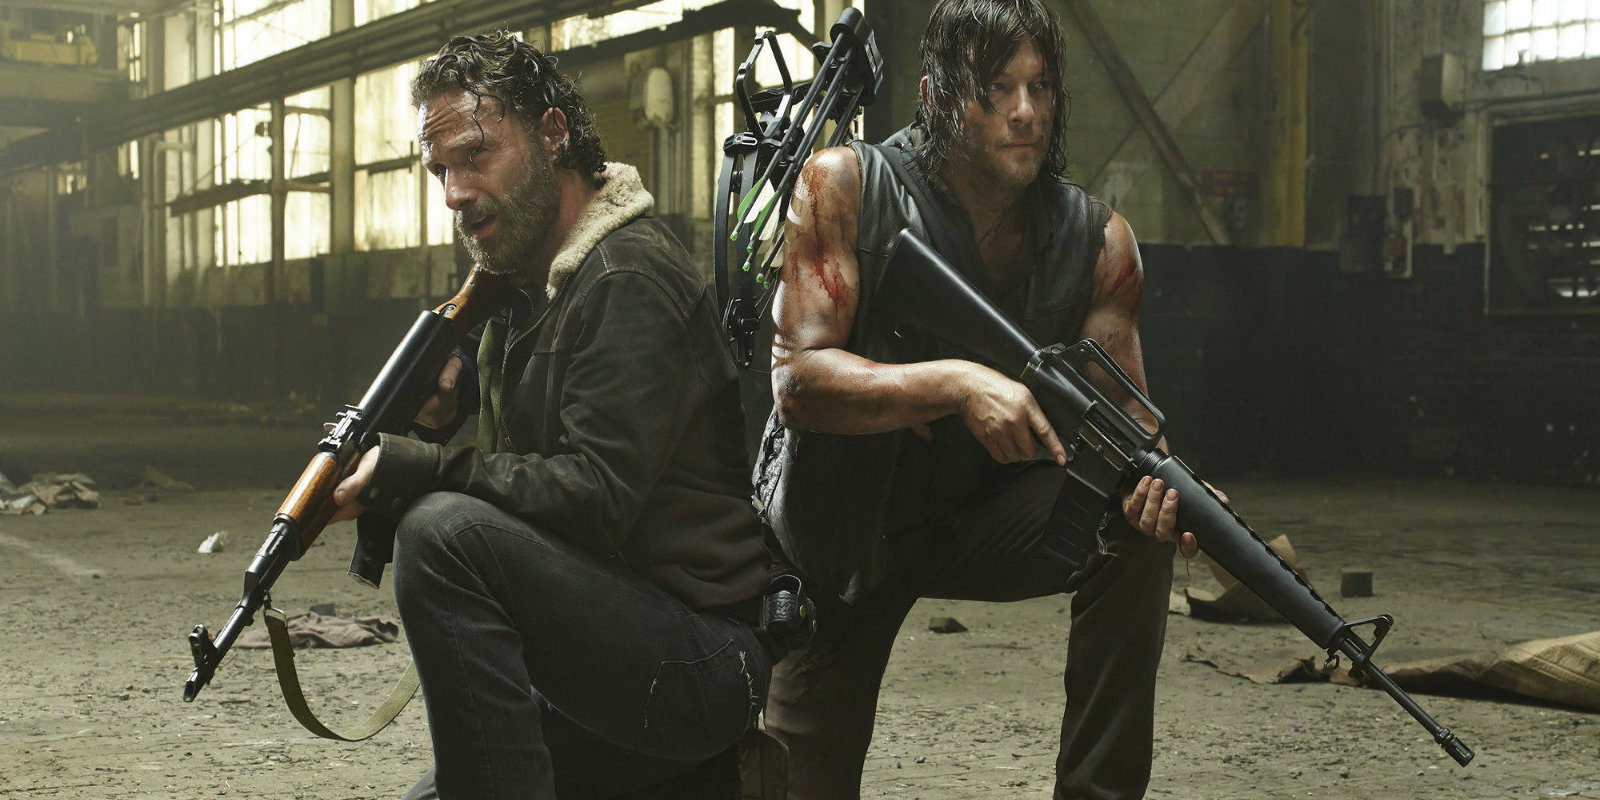 'The Walking Dead' irá a los cines "inevitablemente", según su showrunner